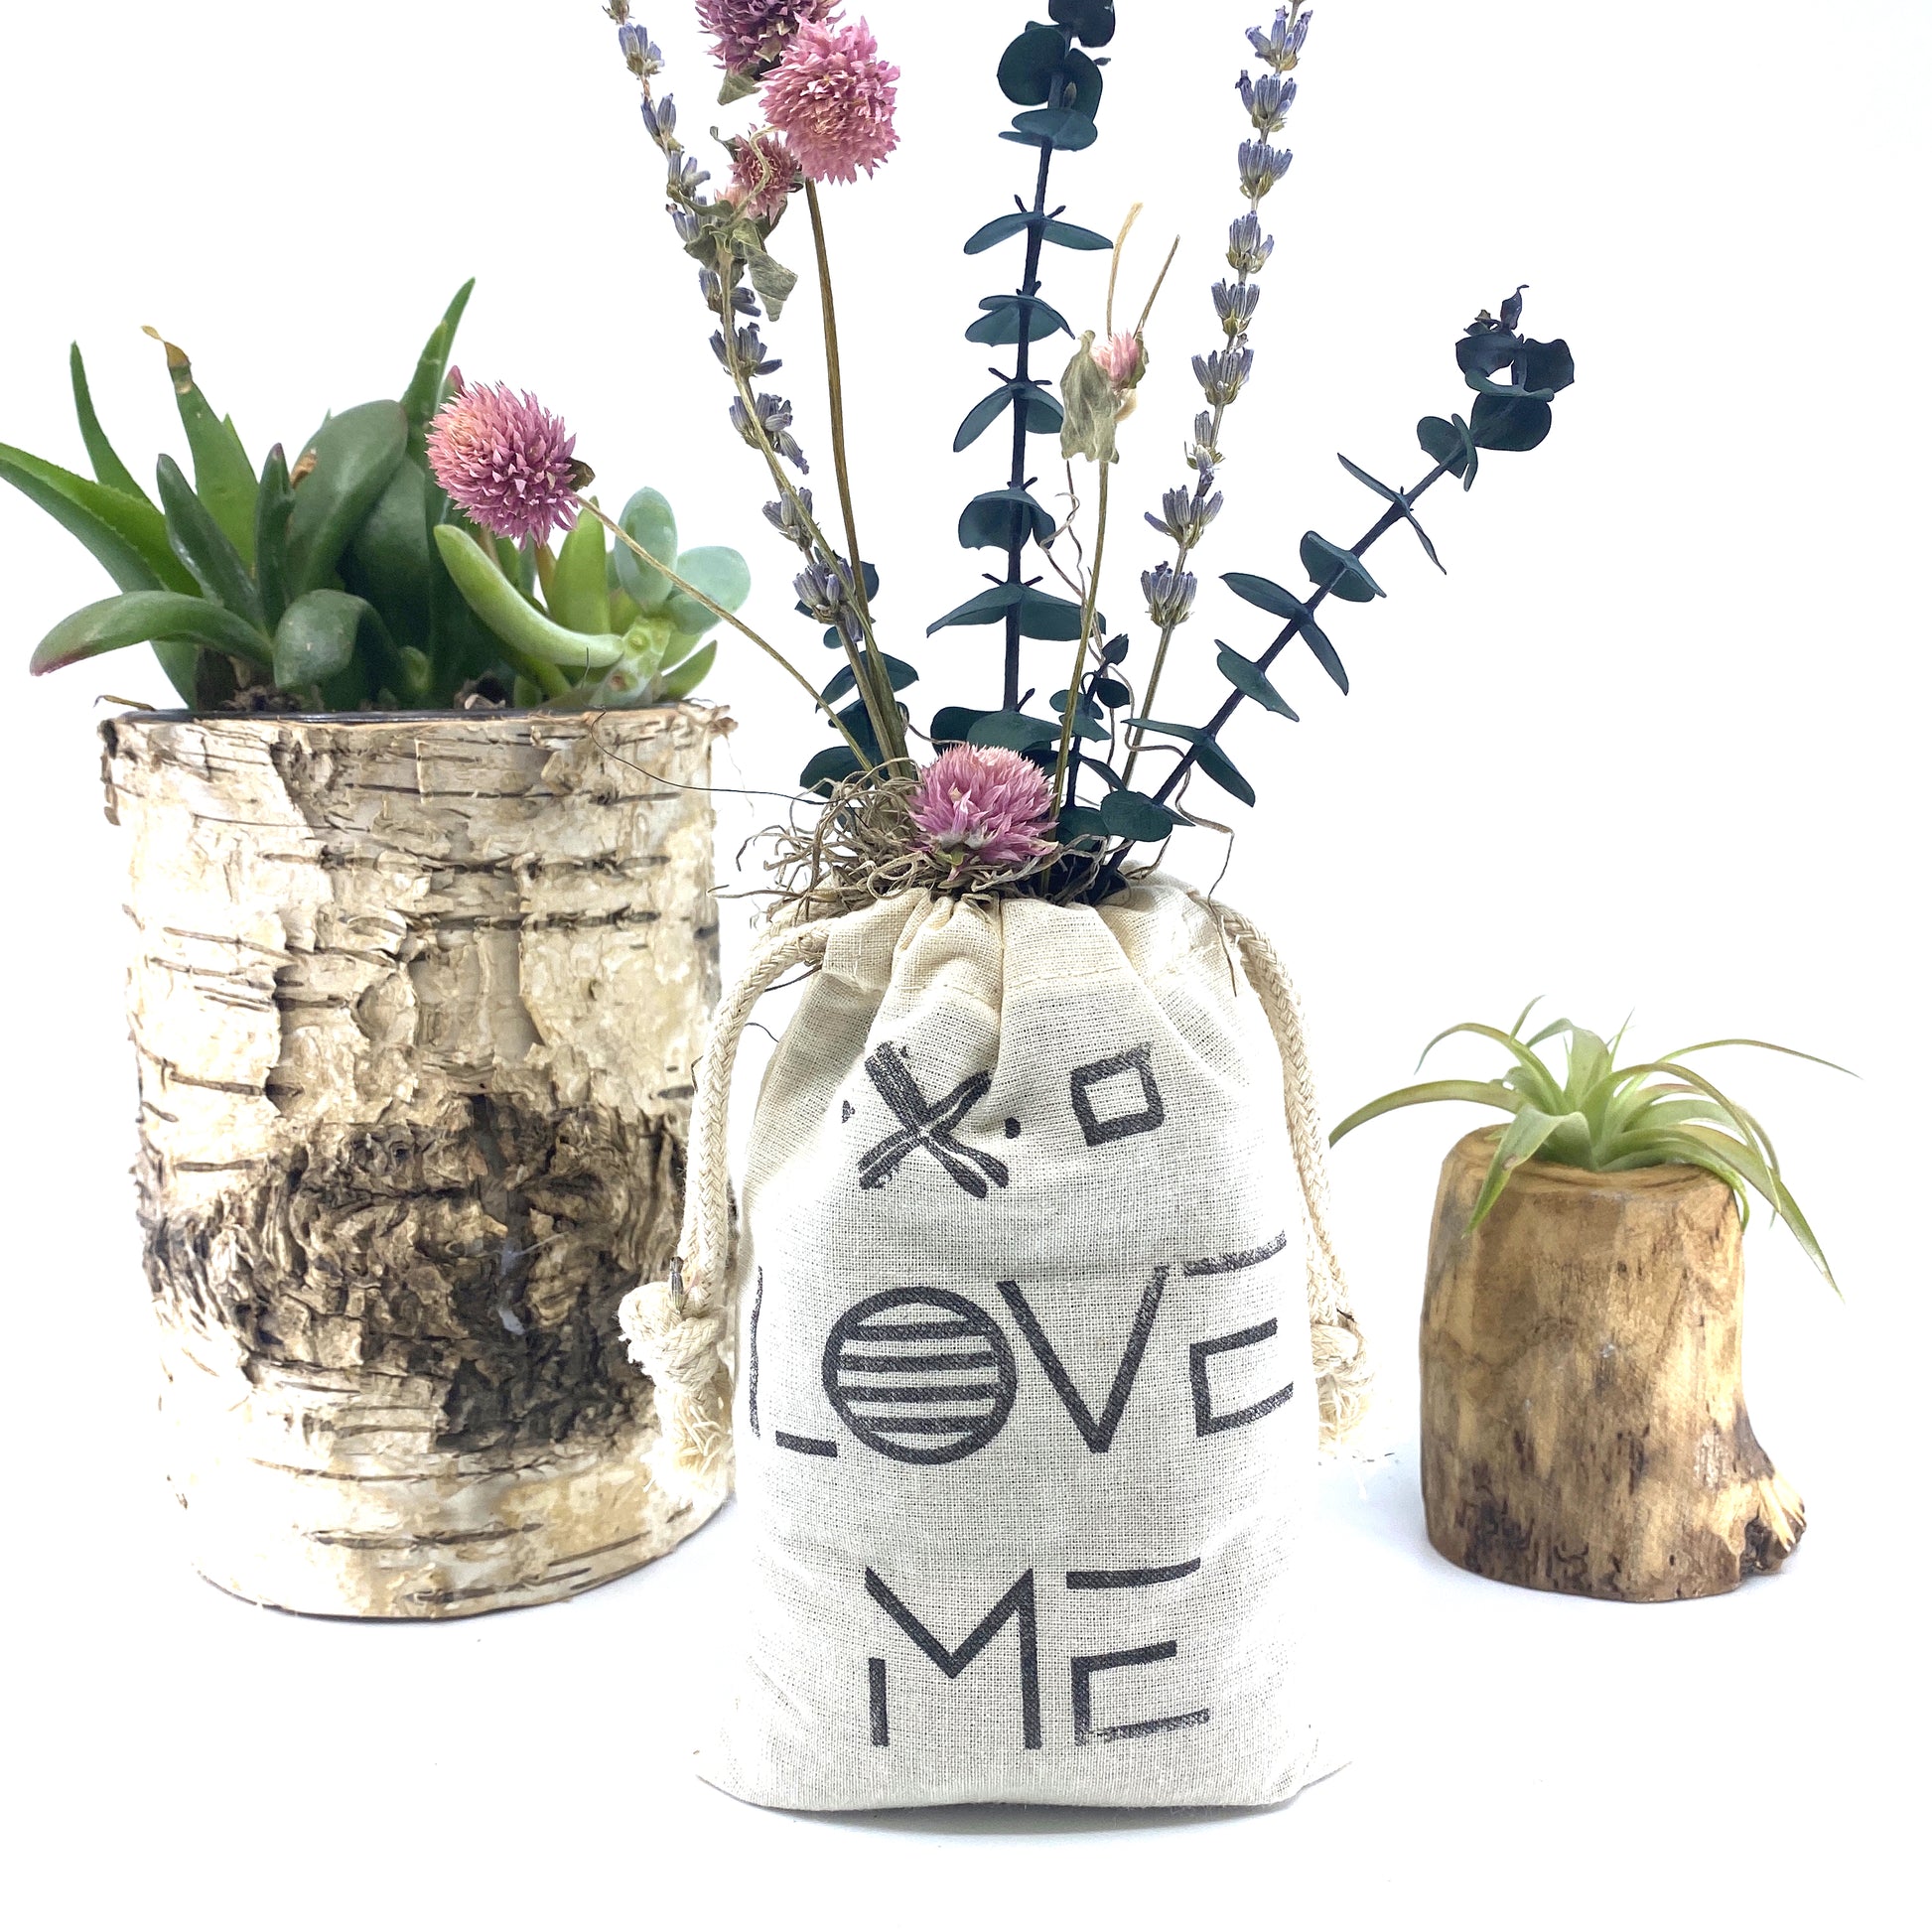 Sack of Flowers, Love Me, Organic, Dried Flower Bouquet Sunsum®